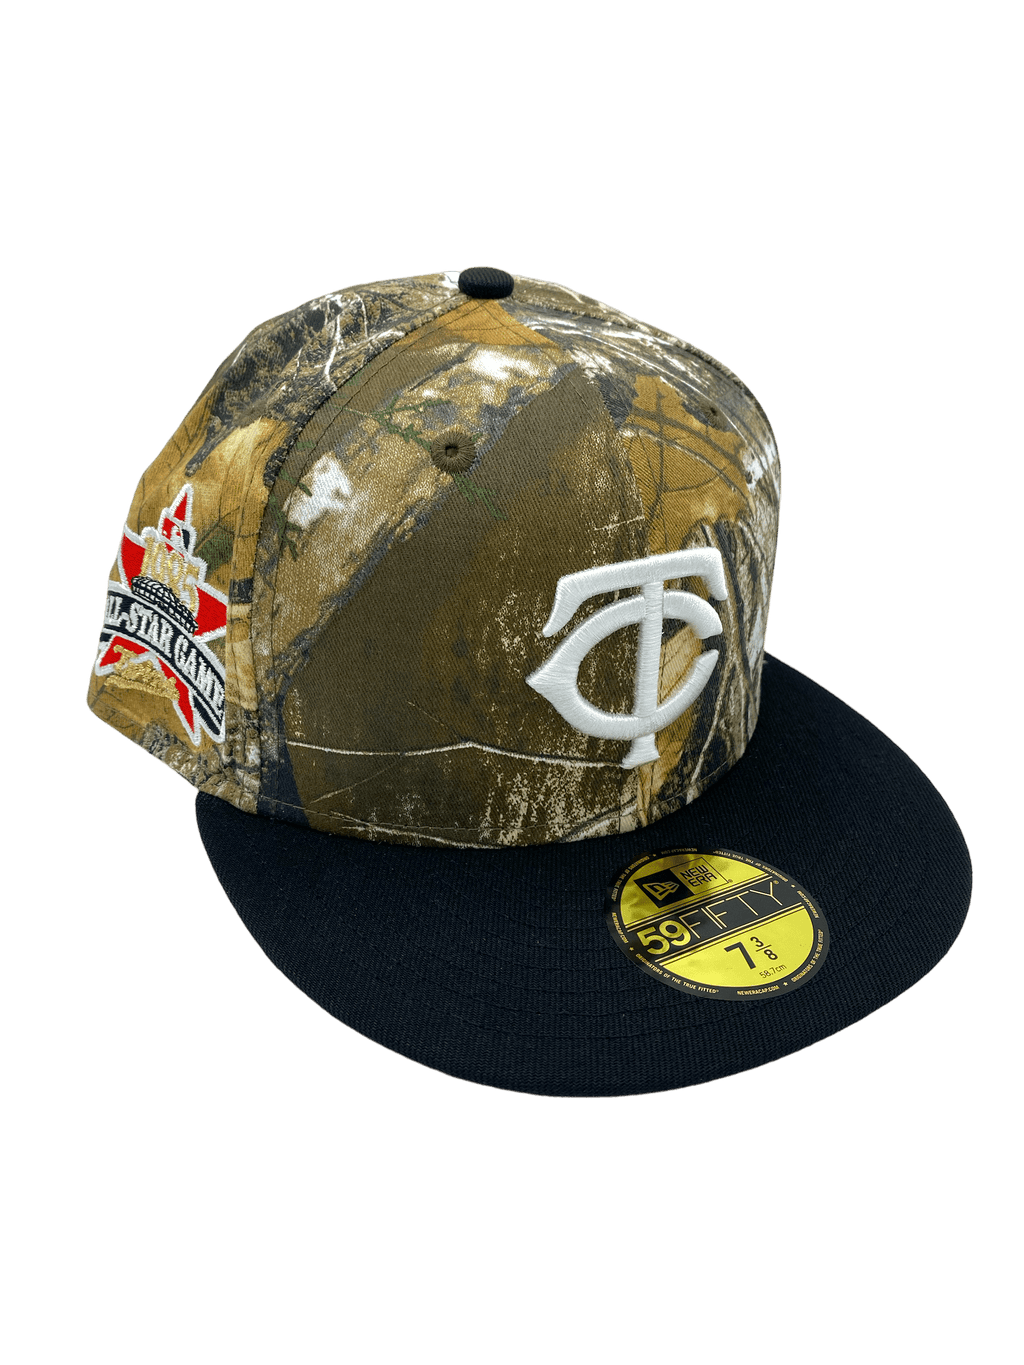 Custom New Era Fitted Hats — Pro Image America